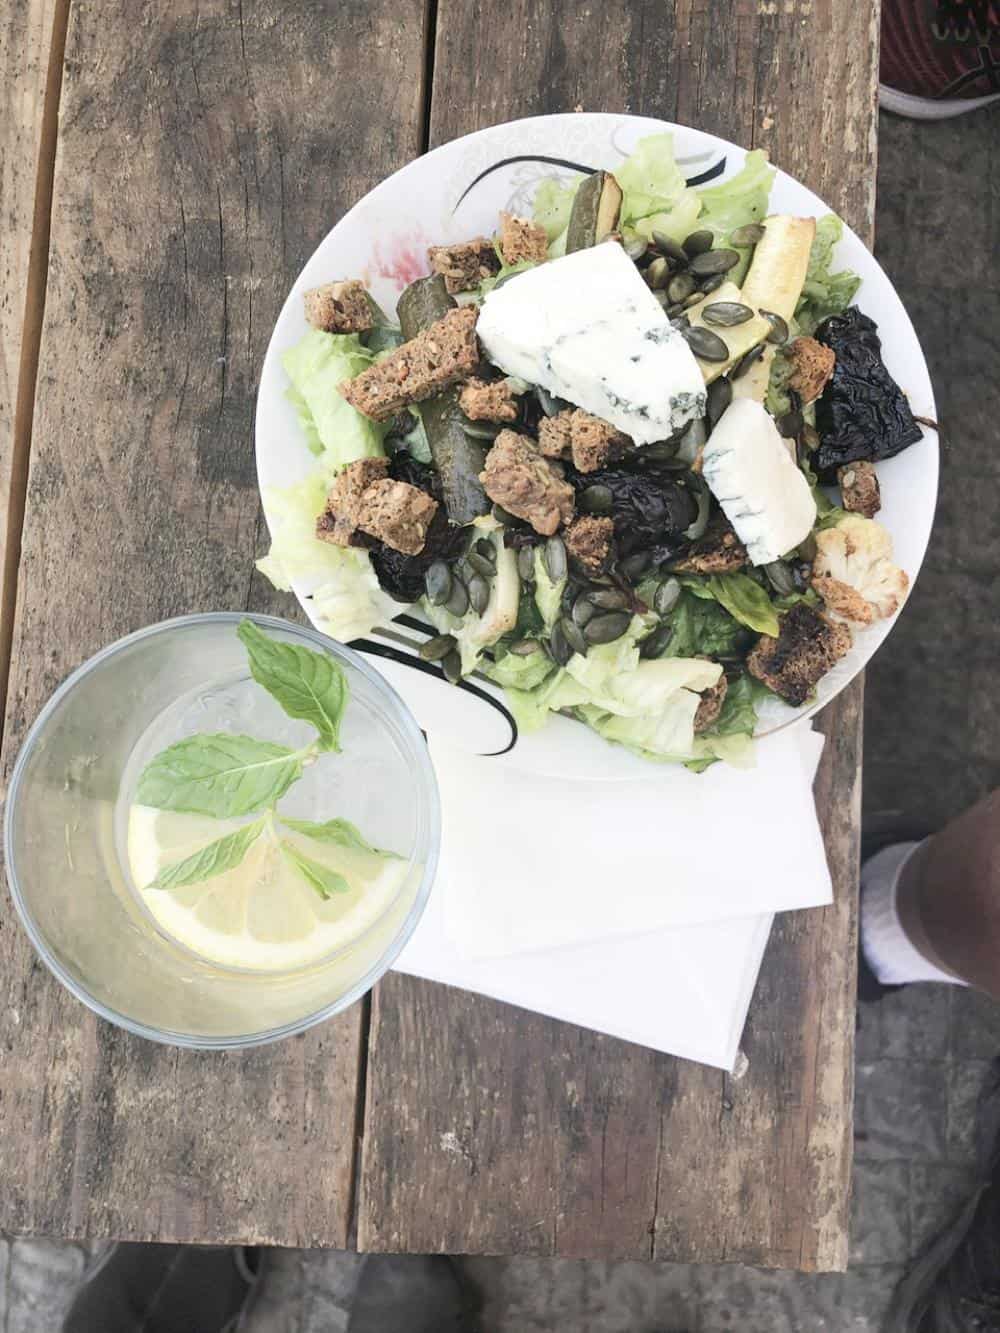 Salad and fresh lemonade at Gina's Cafe on table.